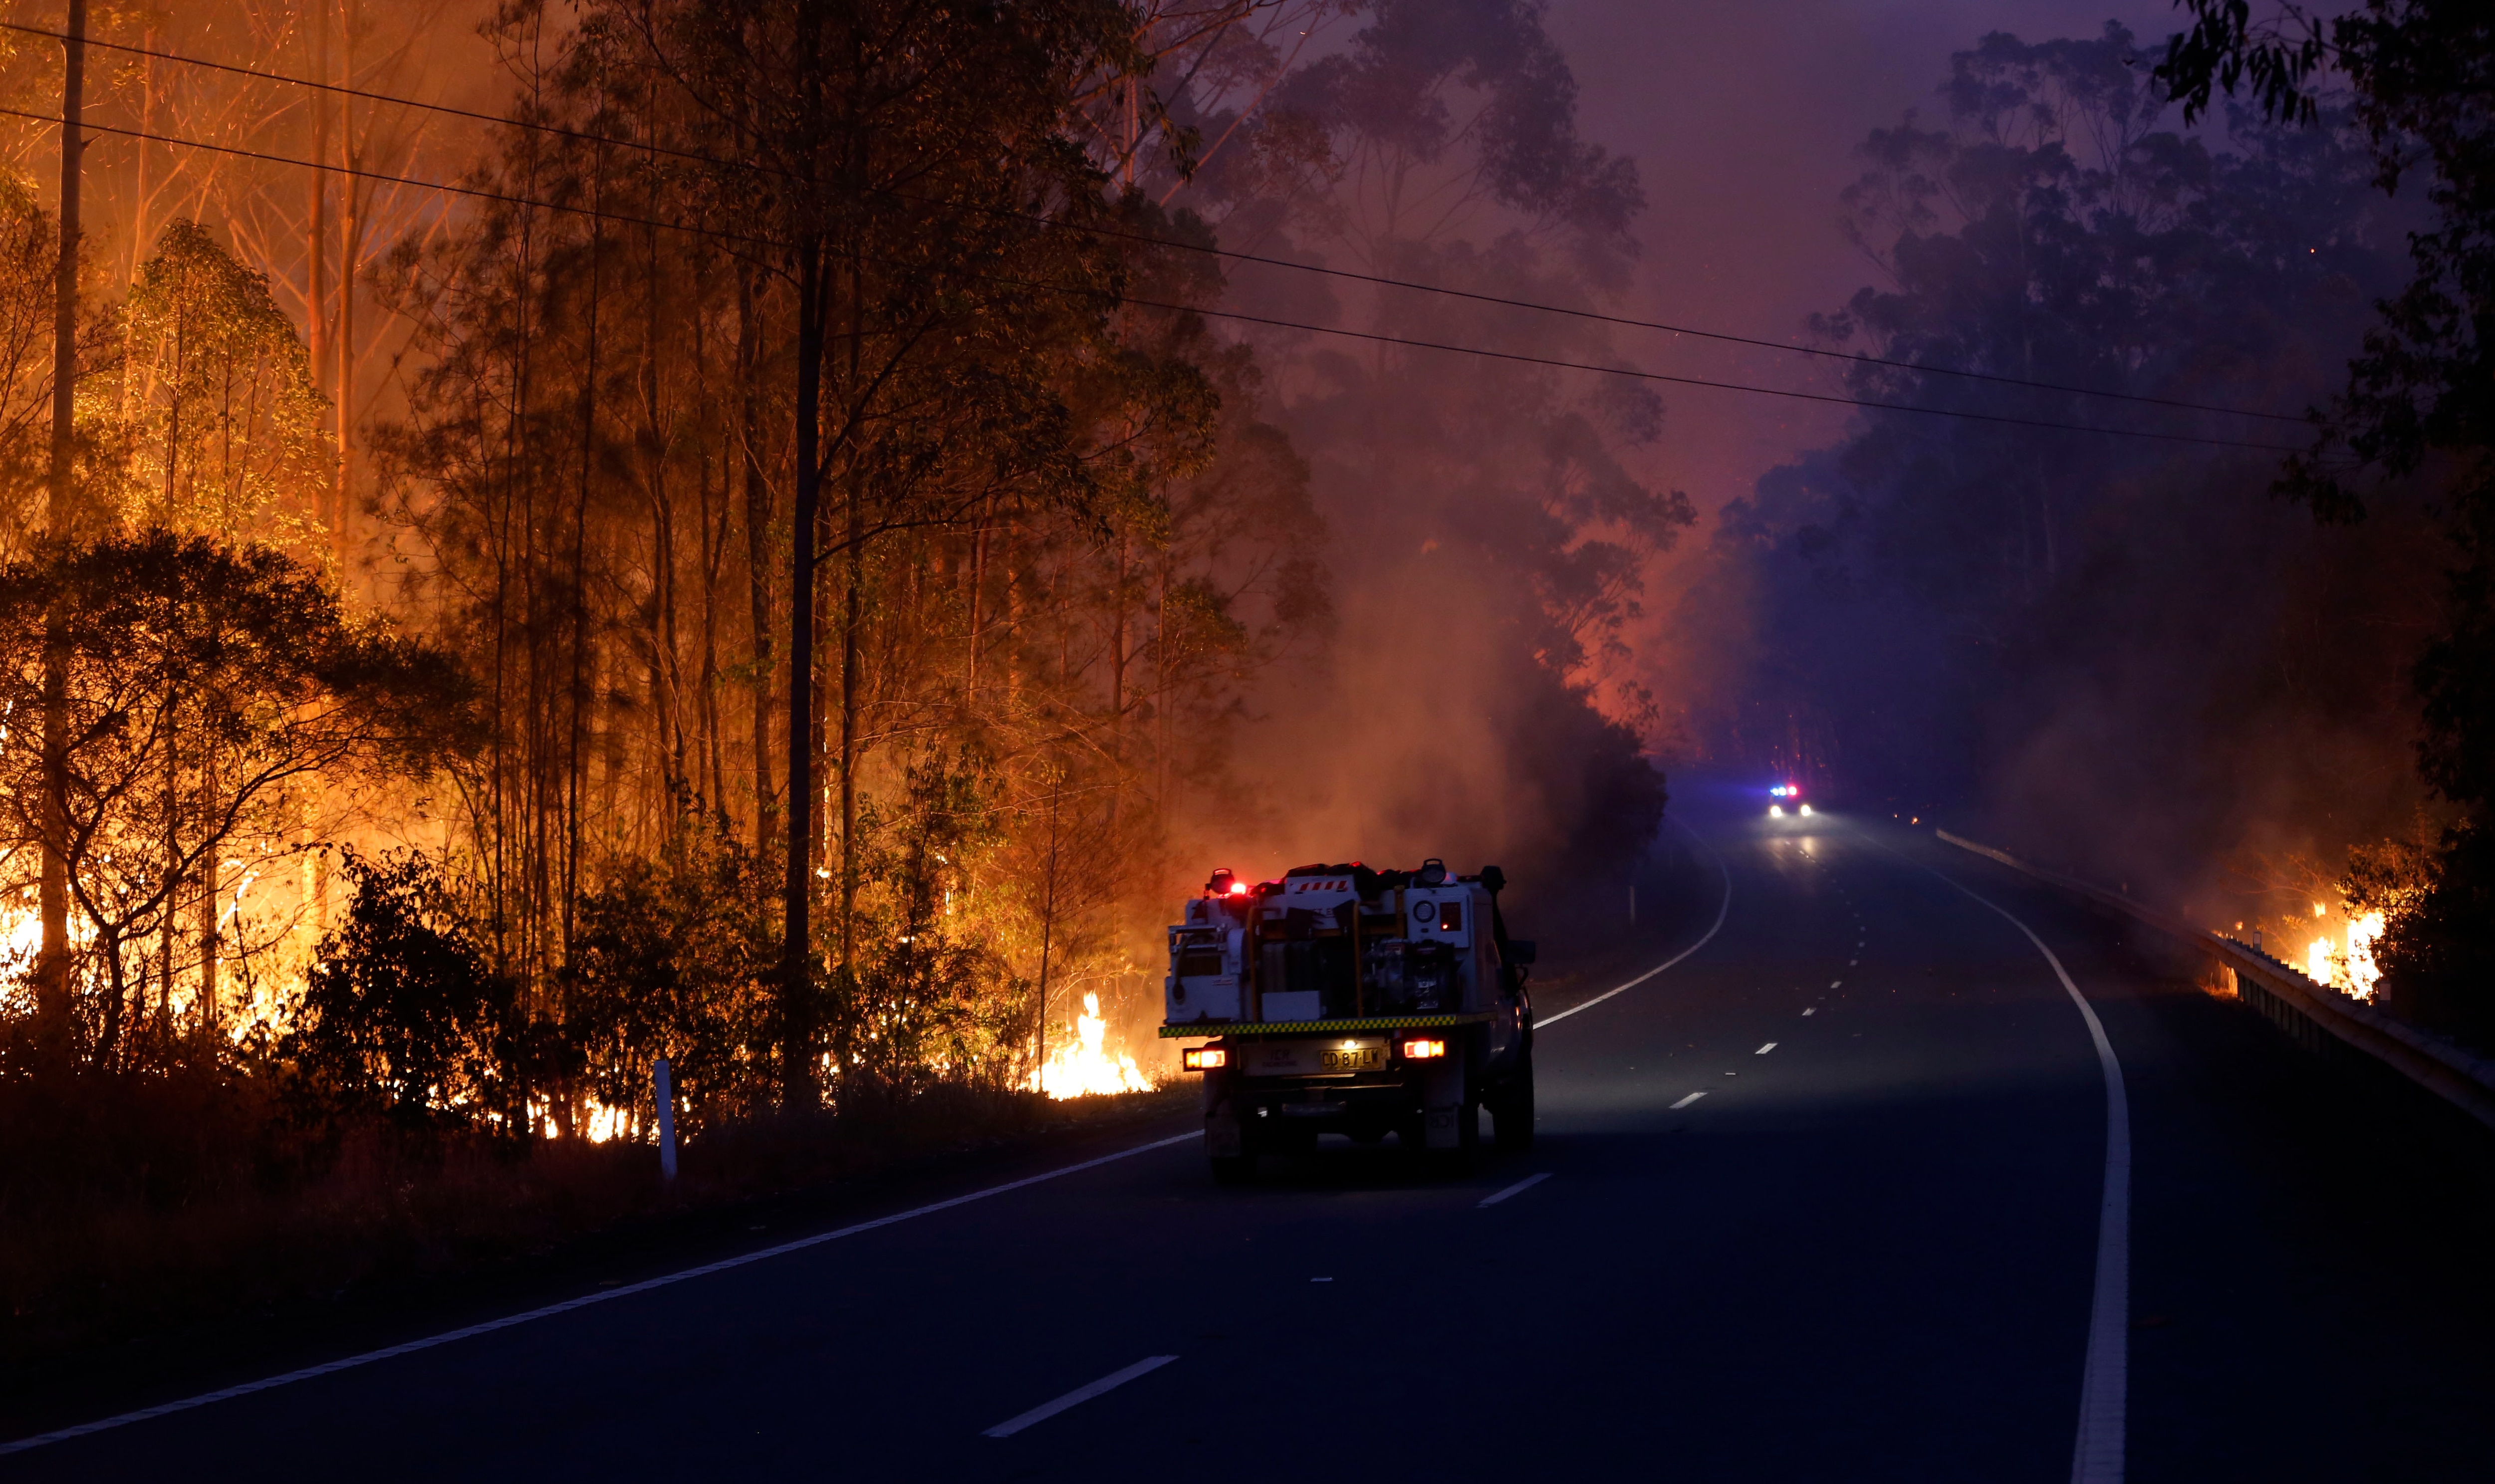 Parts of NSW face catastrophic bushfire danger.